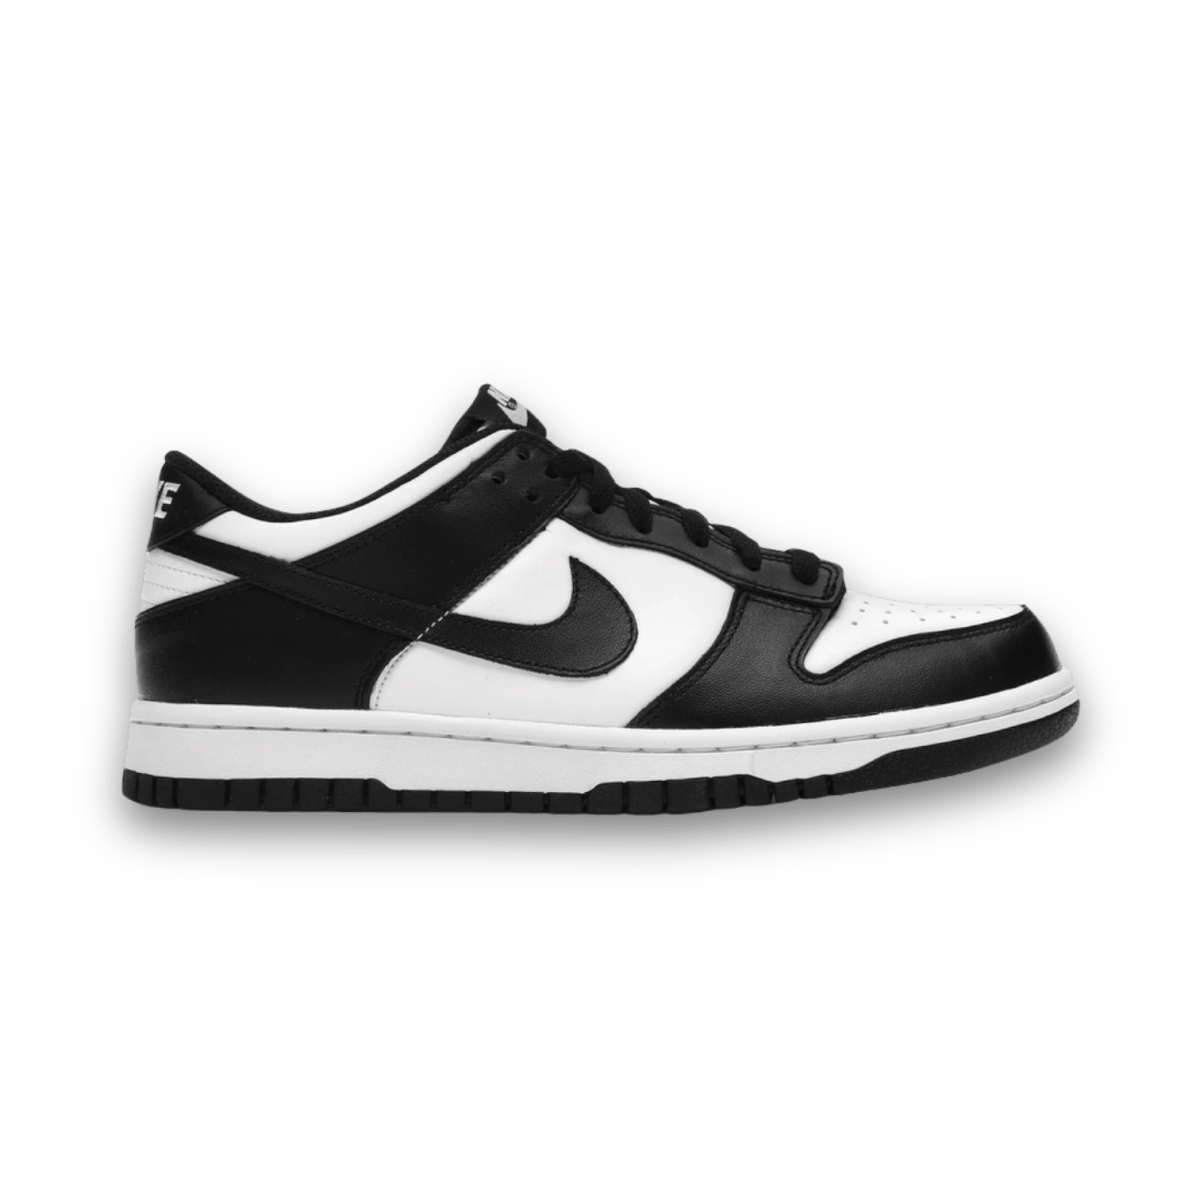 Dunk Low Retro White Black Panda - Low Sneaker - Dunks - Jawns on Fire - sneakers